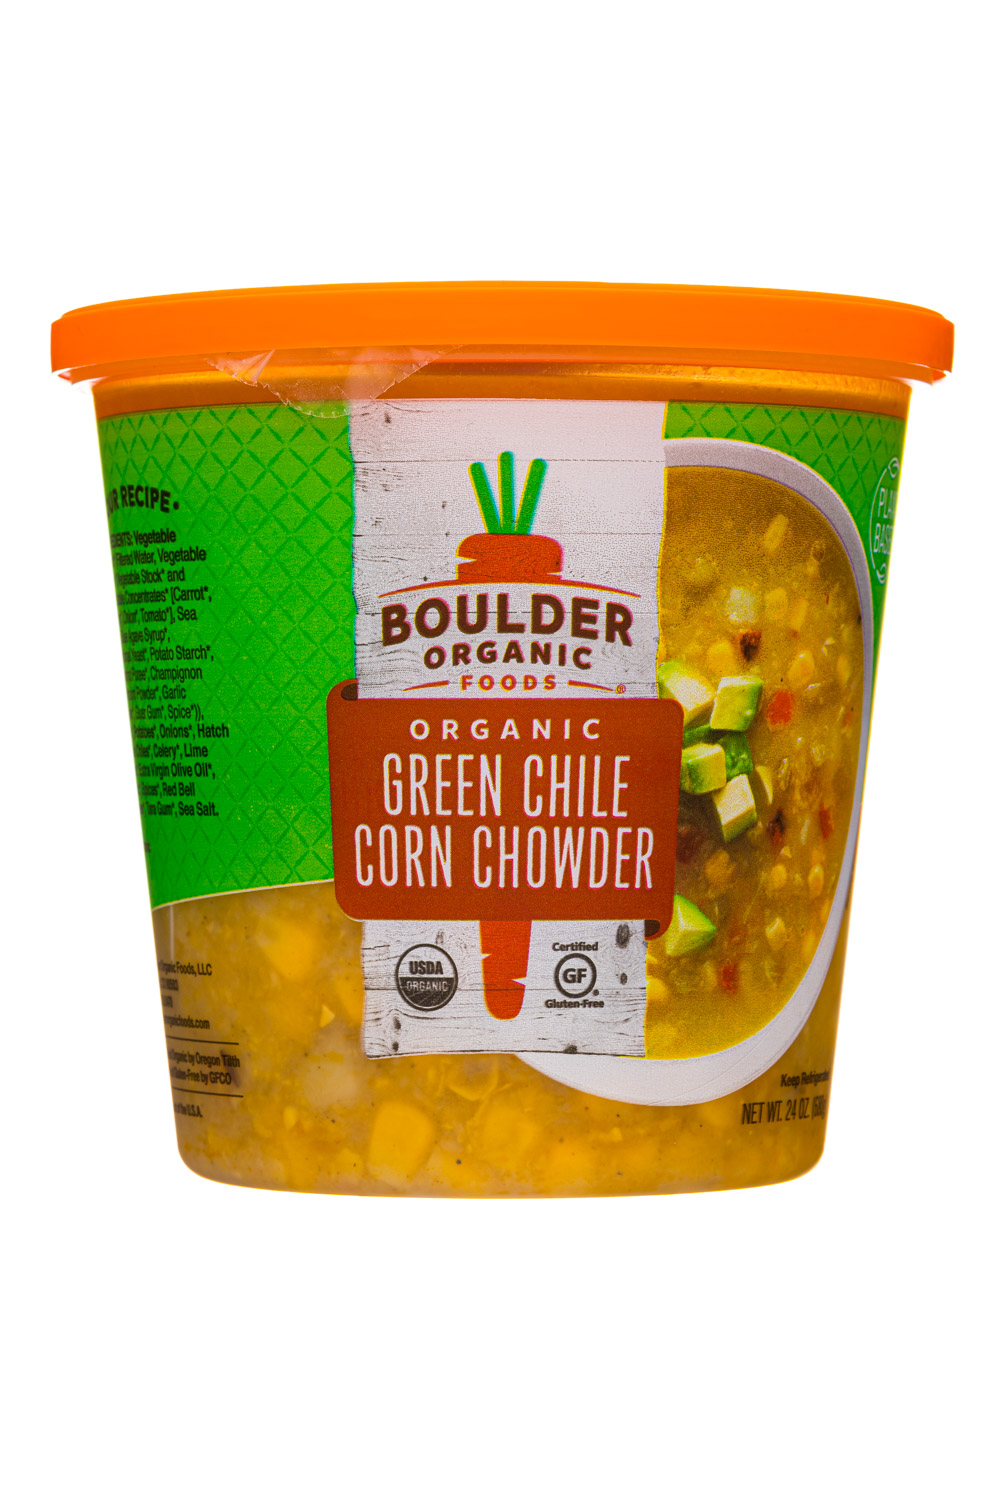 Green Chile Corn Chowder